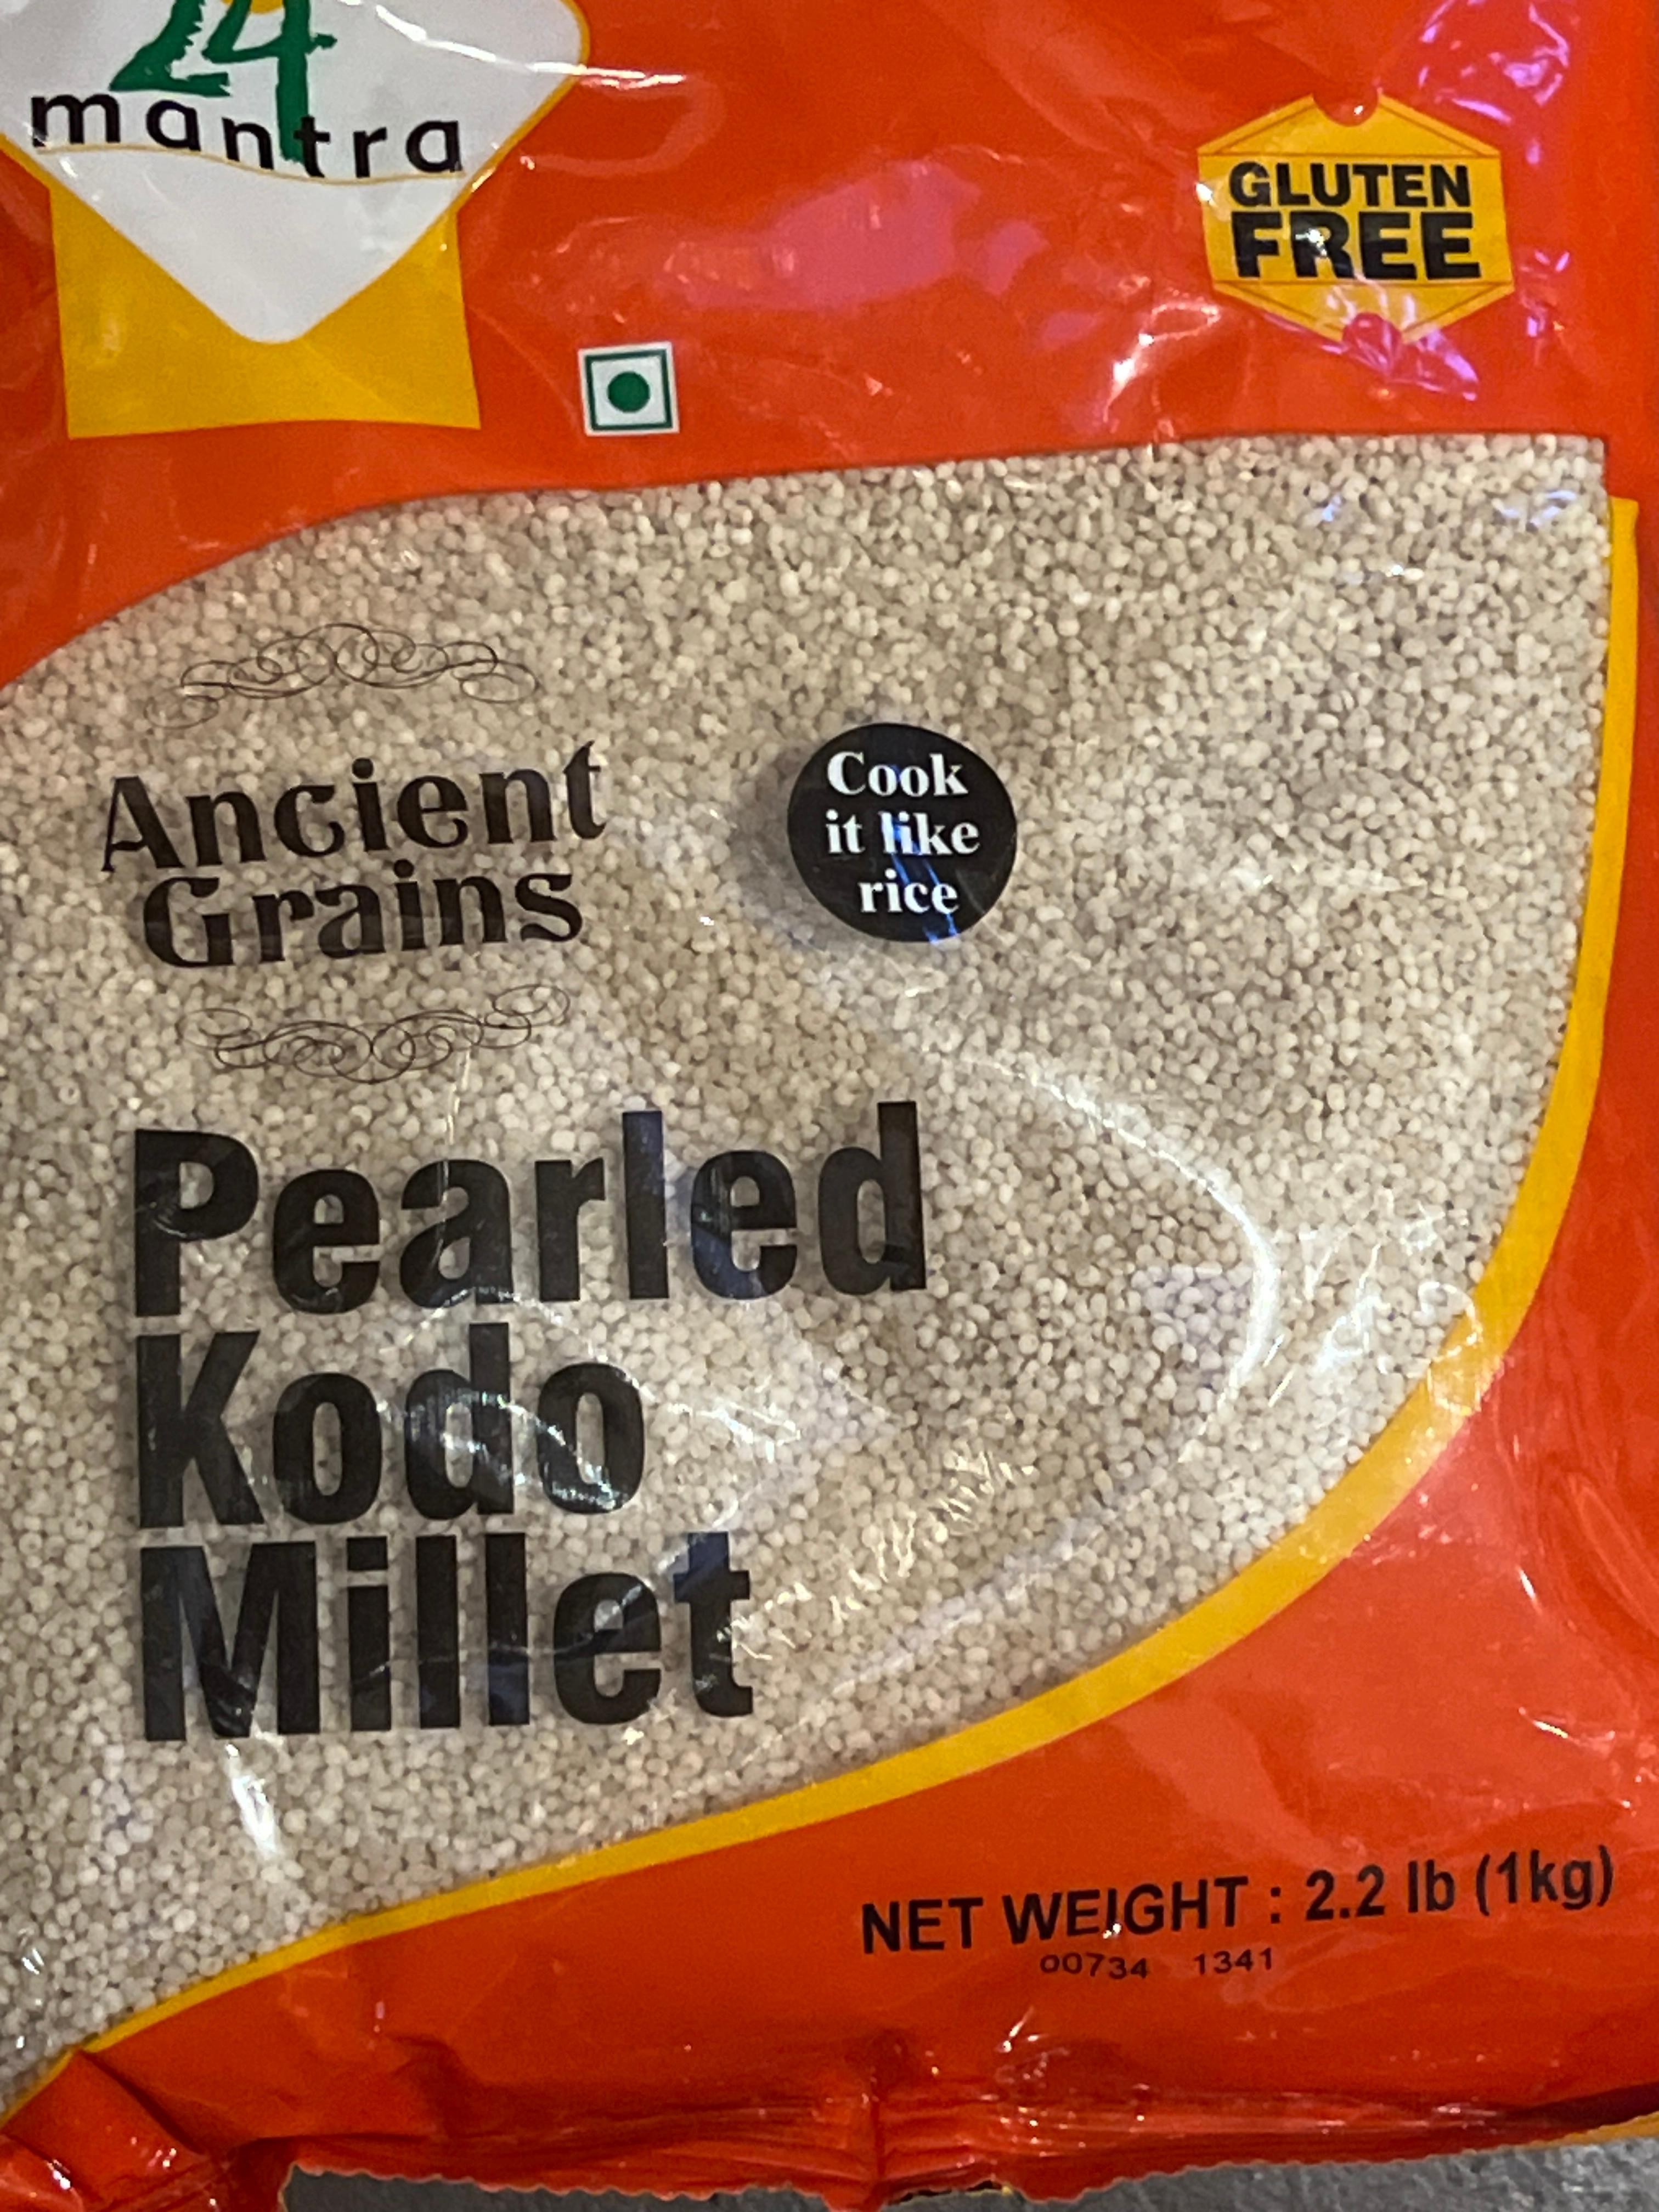 24 Mantra Pearled Kodo Millet 2.2lb